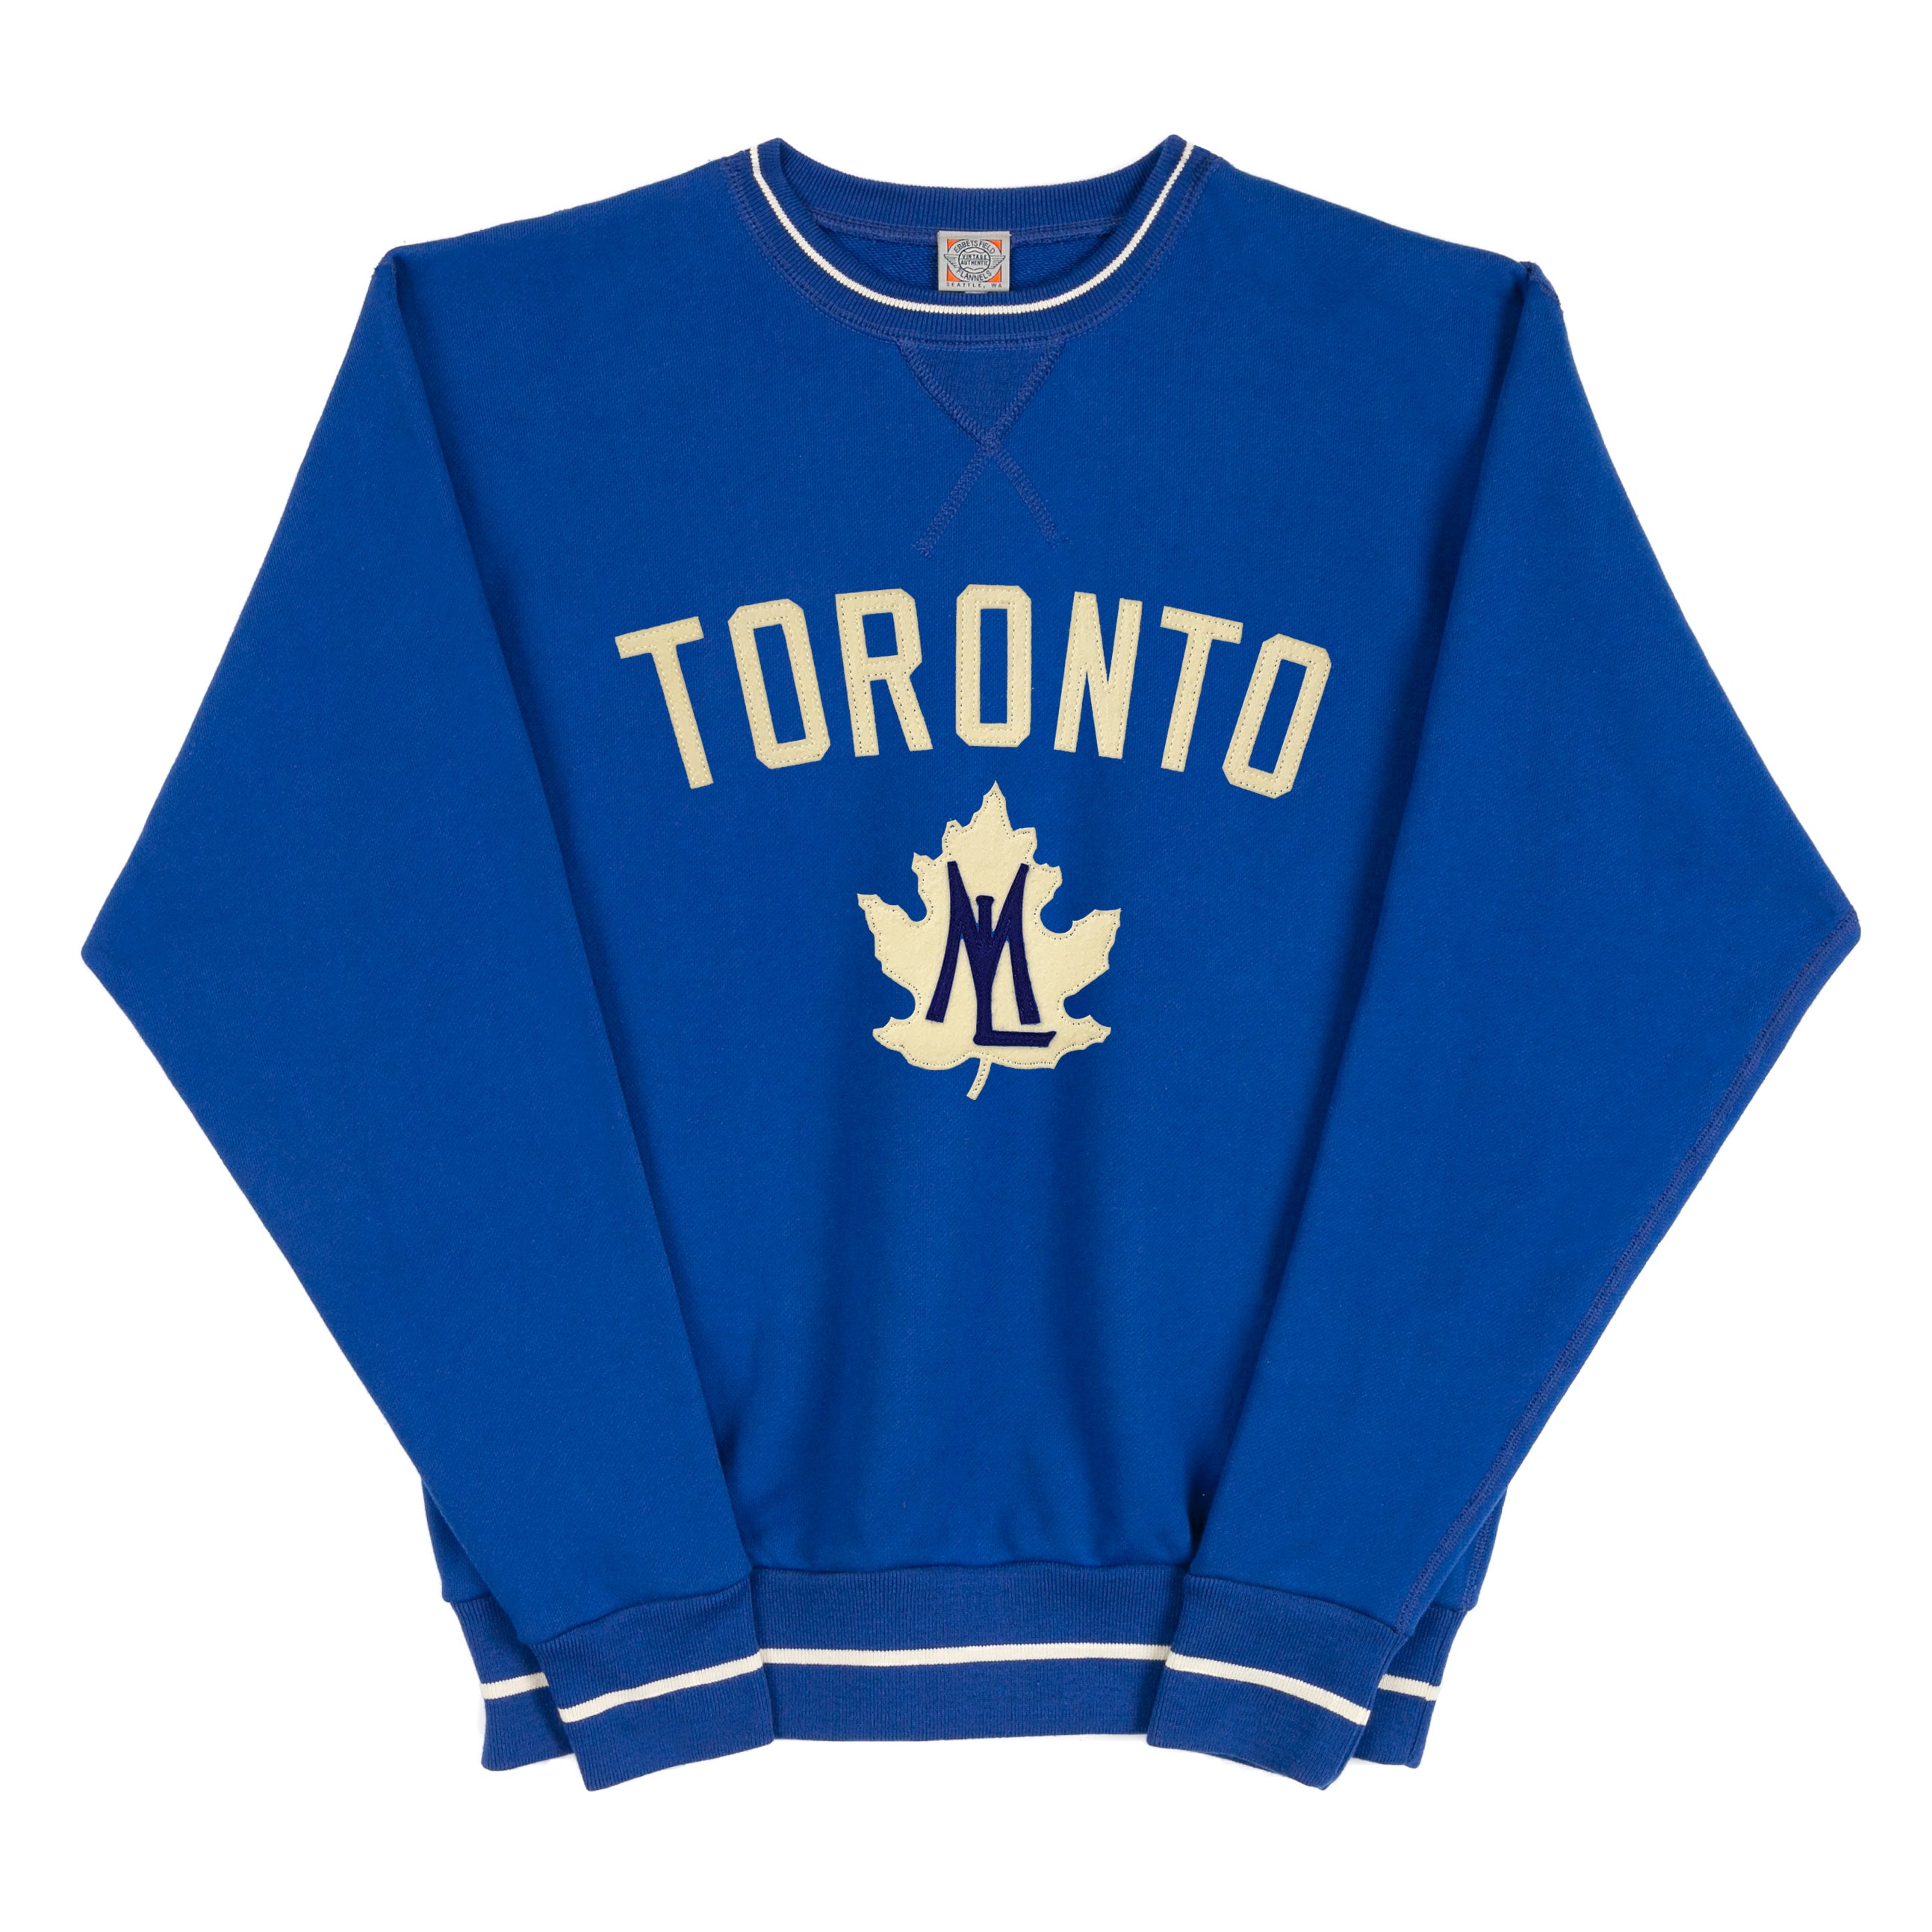 Ebbets Field Flannels Heritage Series Toronto Maple Leafs Sweater/Jersey